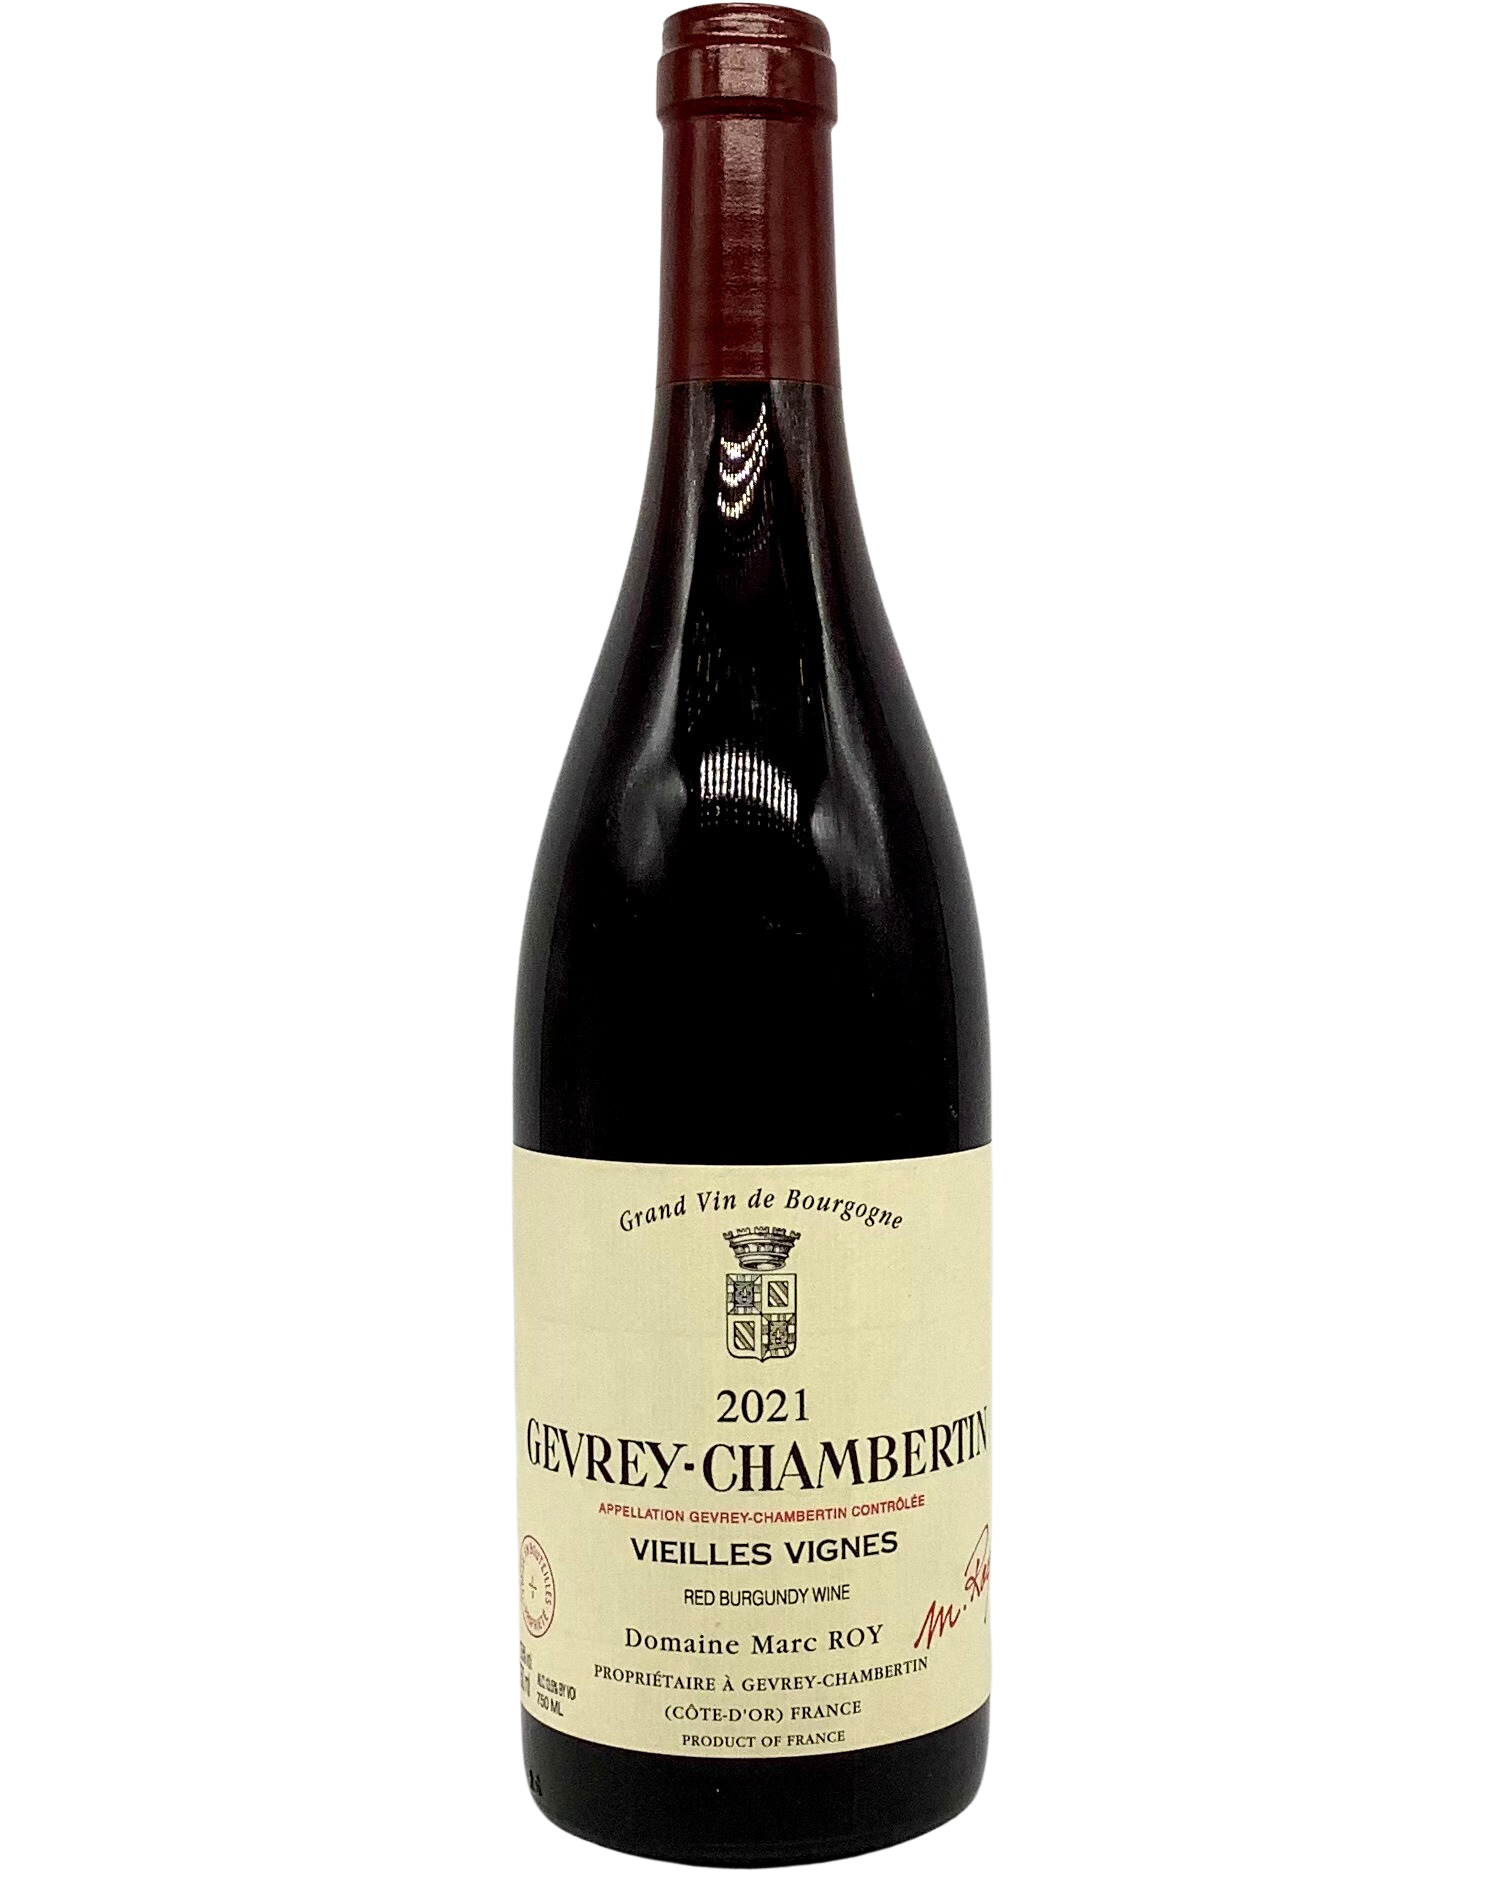 Domaine Marc Roy, Pinot Noir, Gevrey-Chambertin "Vieilles Vignes" Côte de Nuits, Burgundy, France 2021